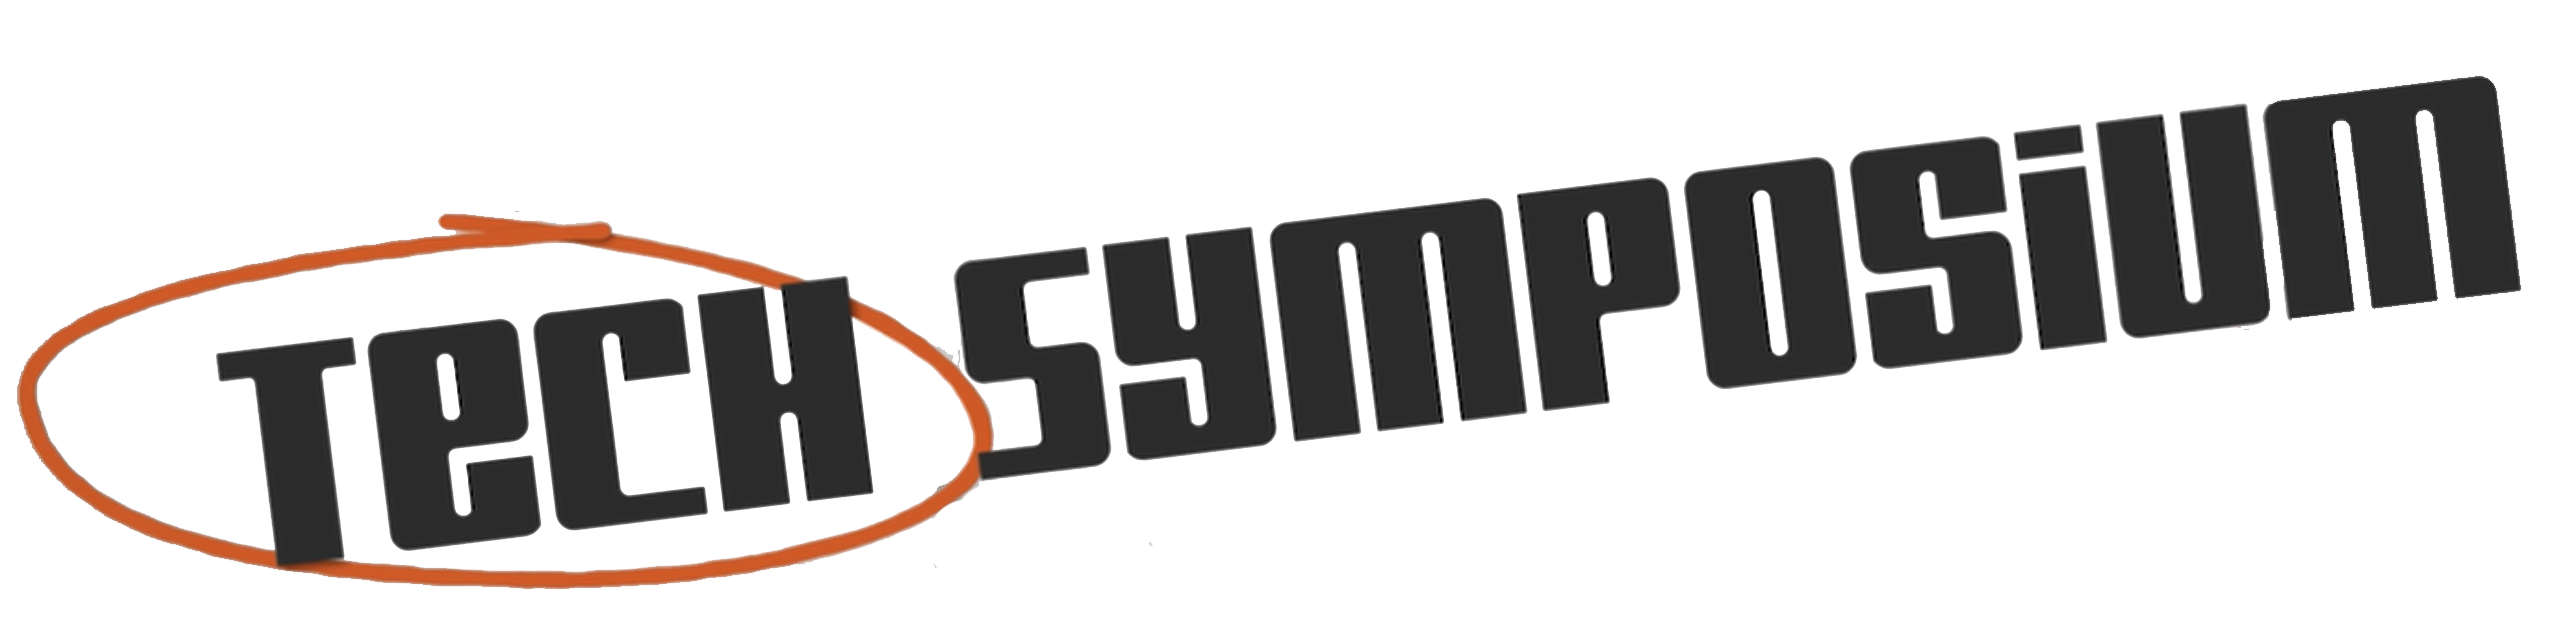 Tech Symposium Logo